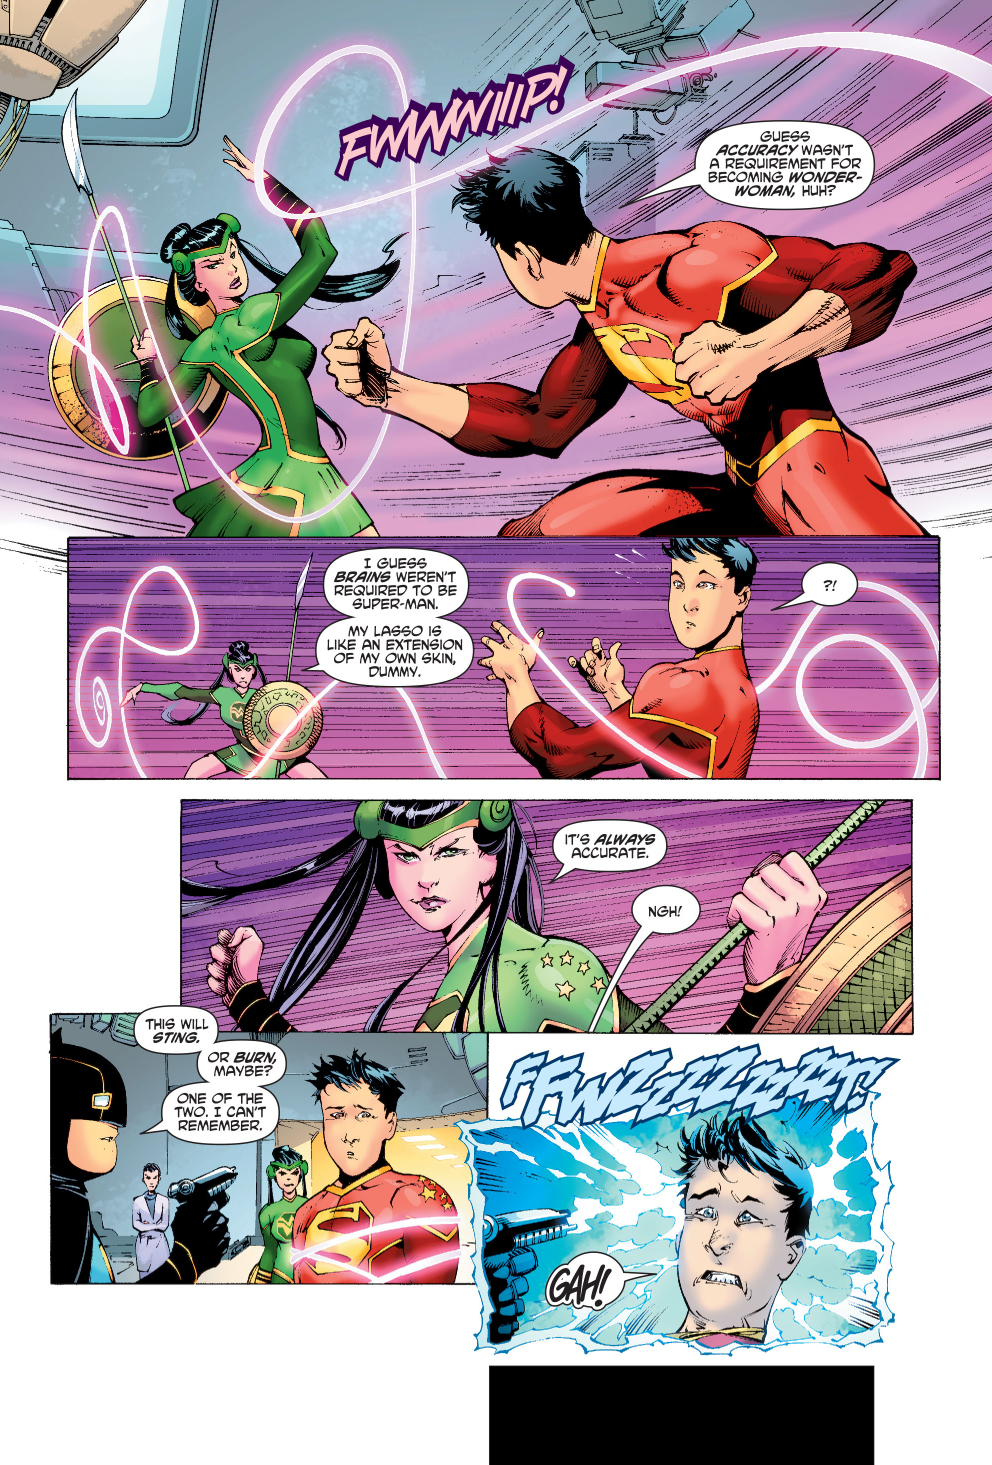 Chinese Super-Man VS Chinese Bat-Man And Chinese Wonder-Woman